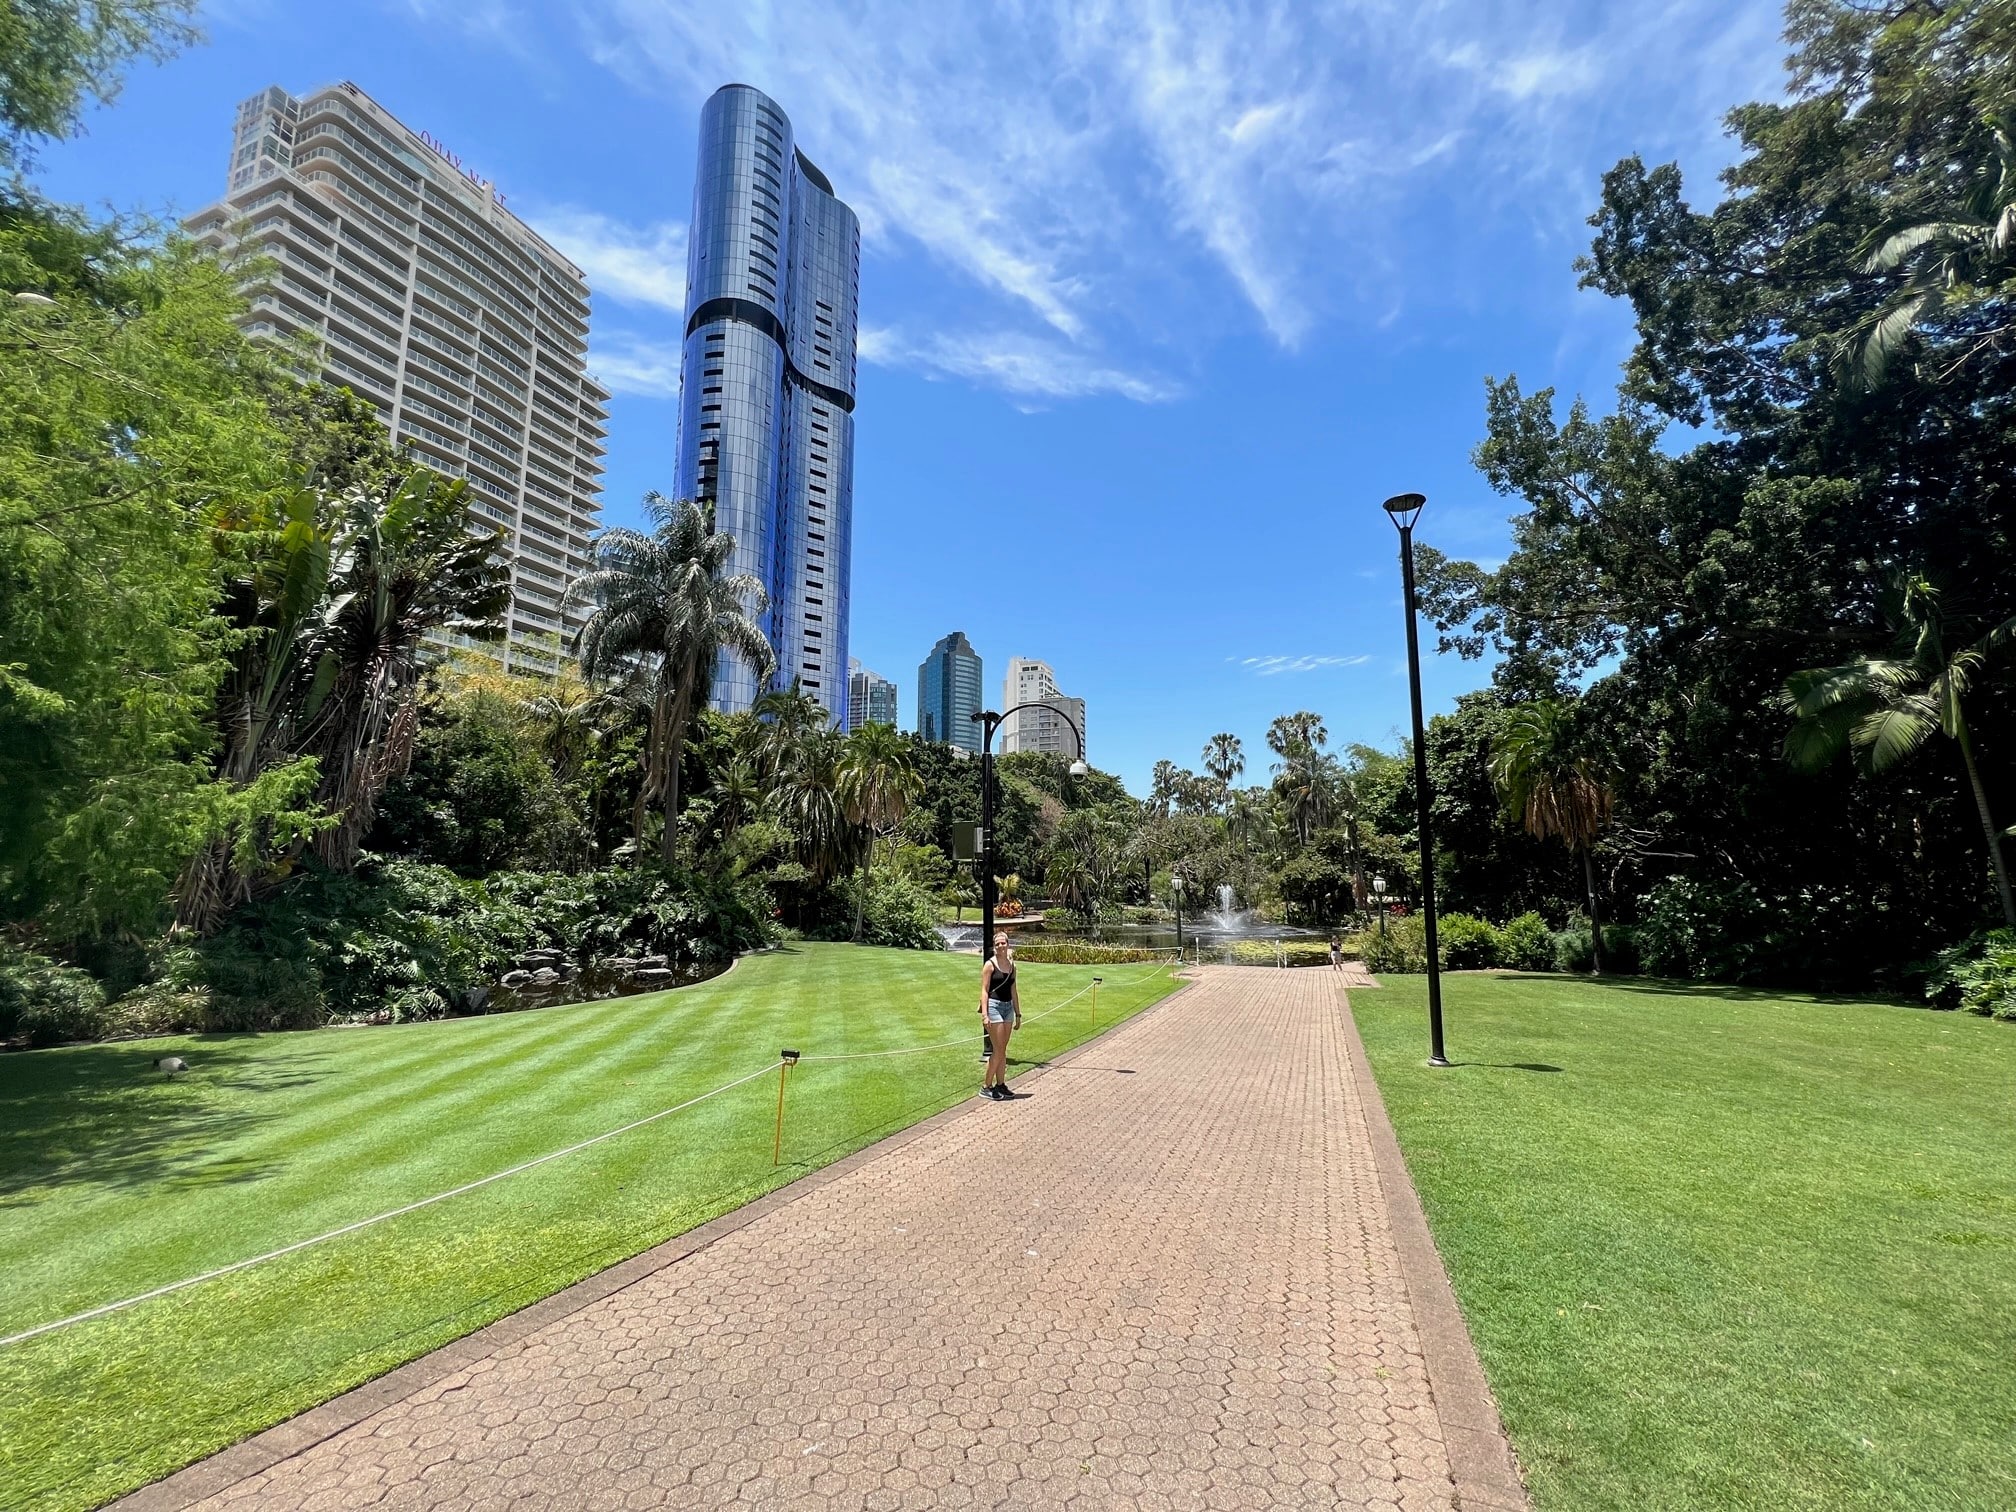 The Botanical Gardens in Brisbane